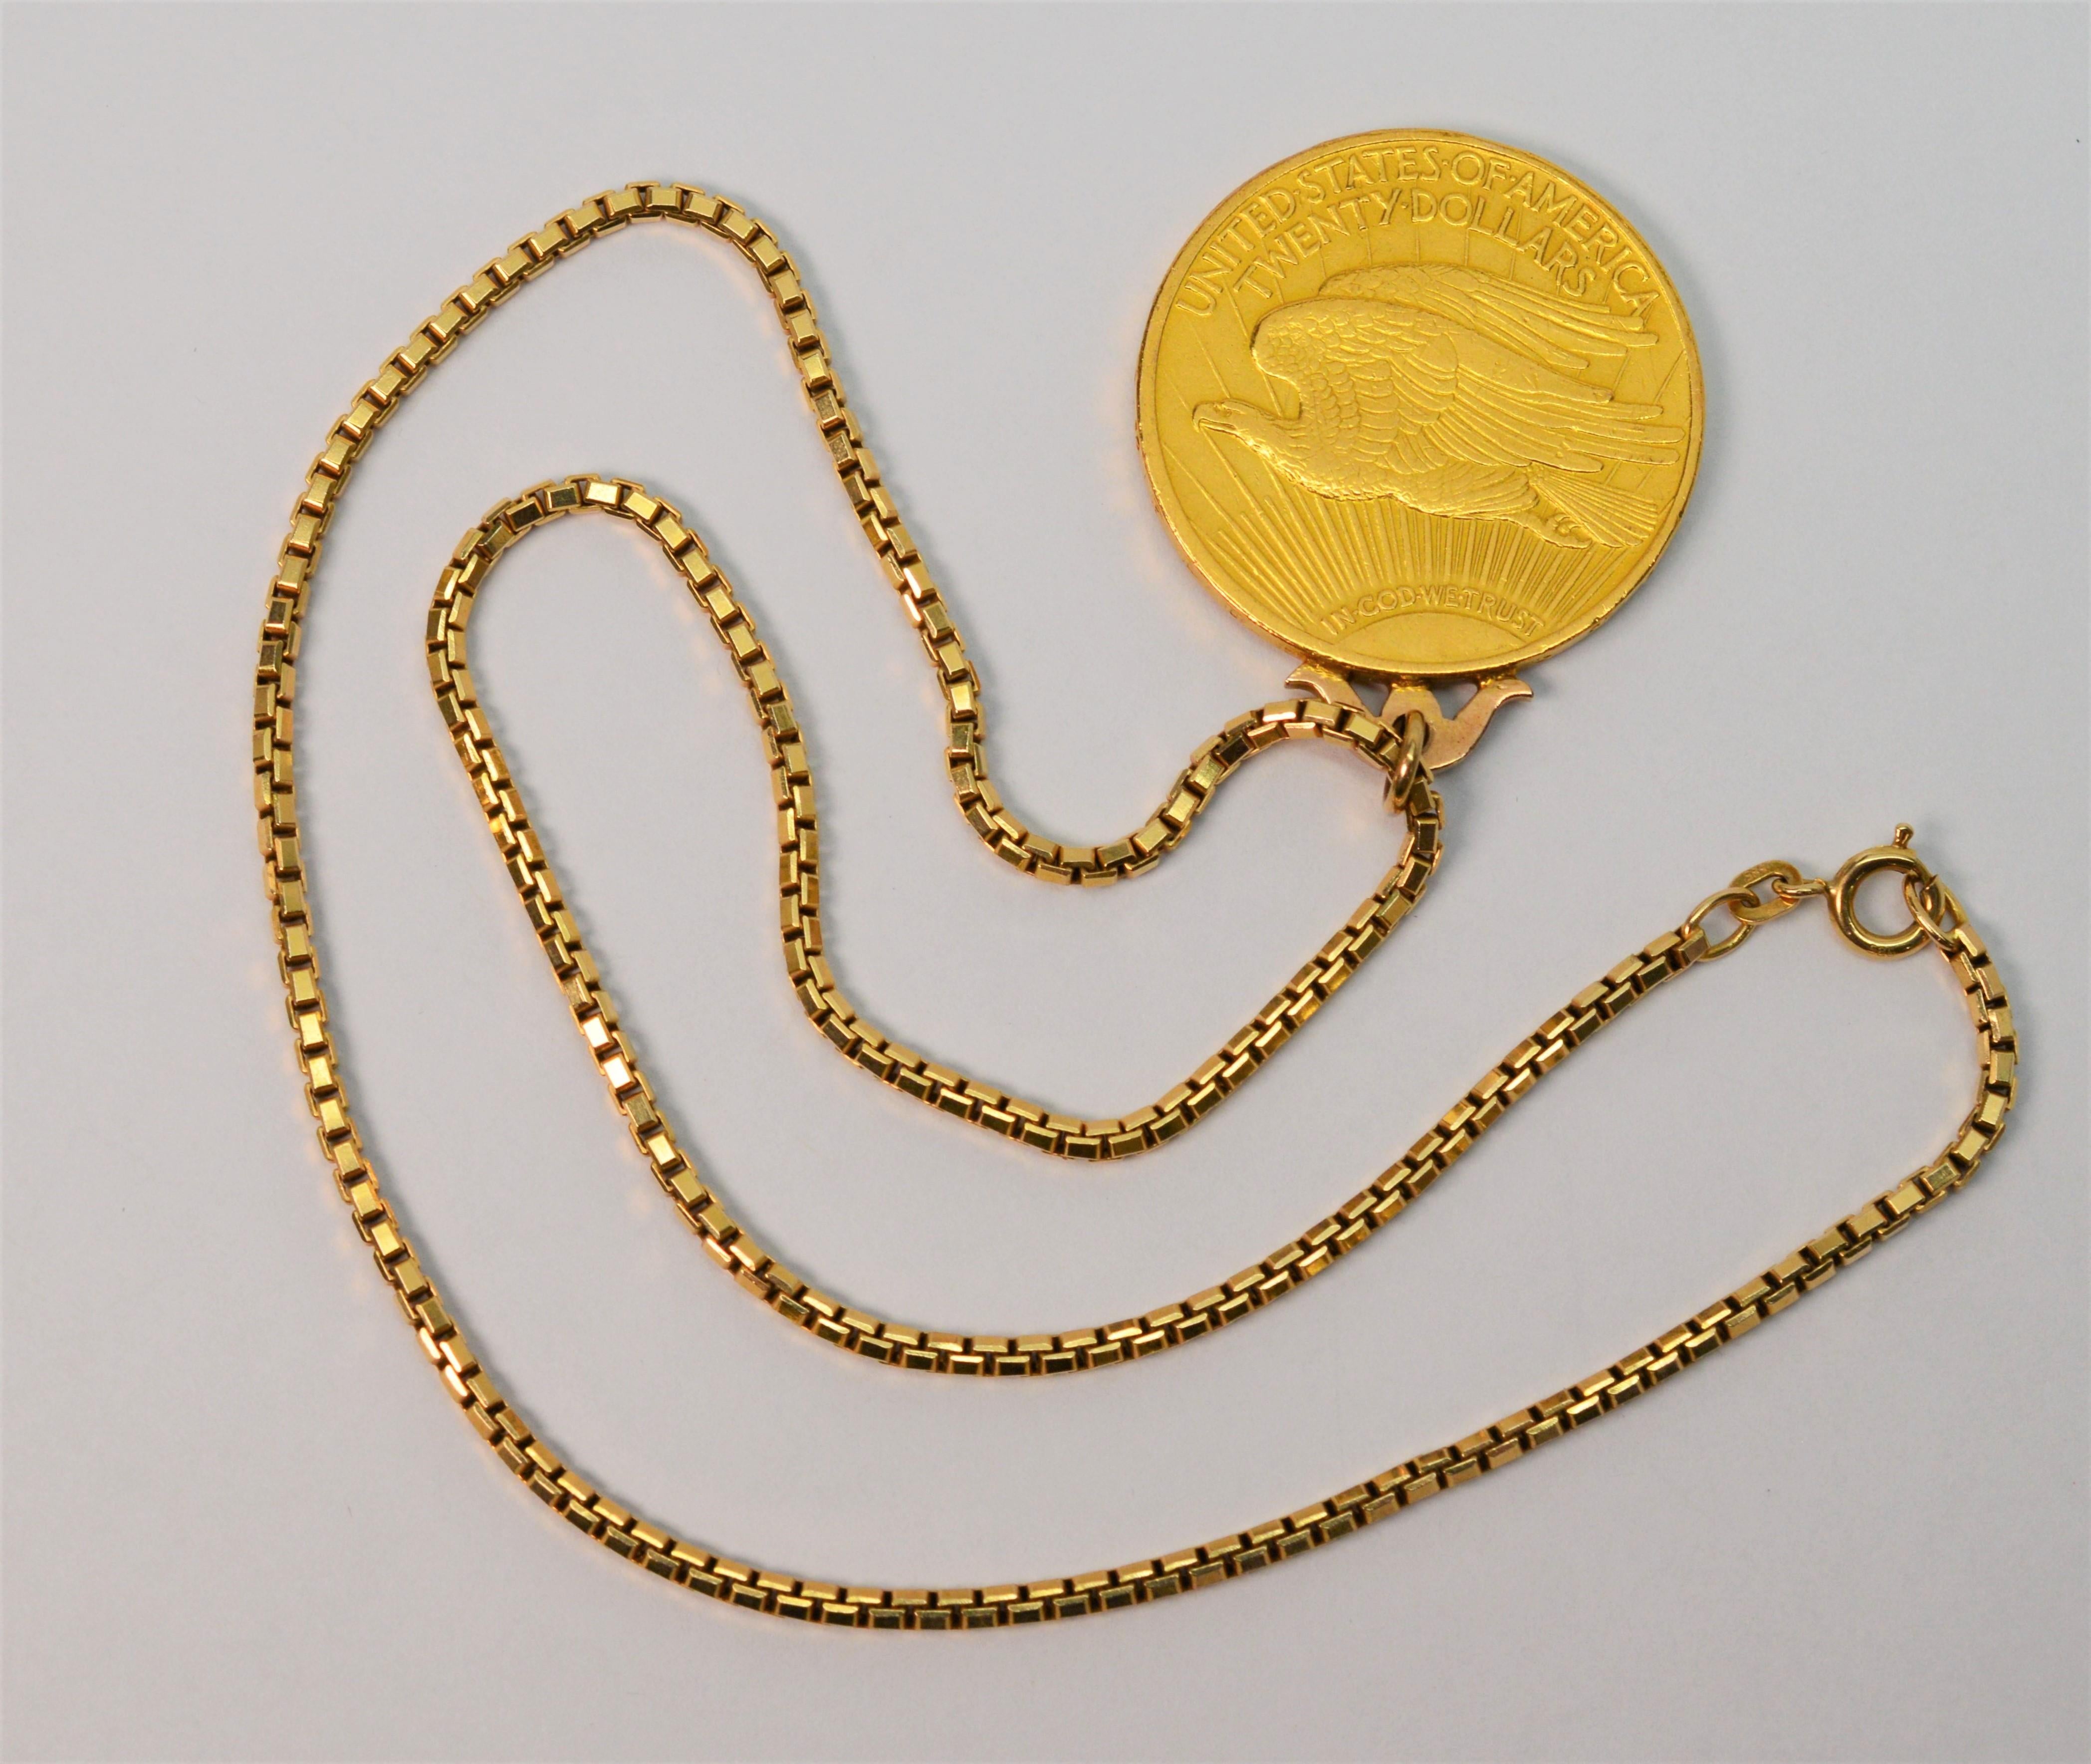 gold eagle coin pendant